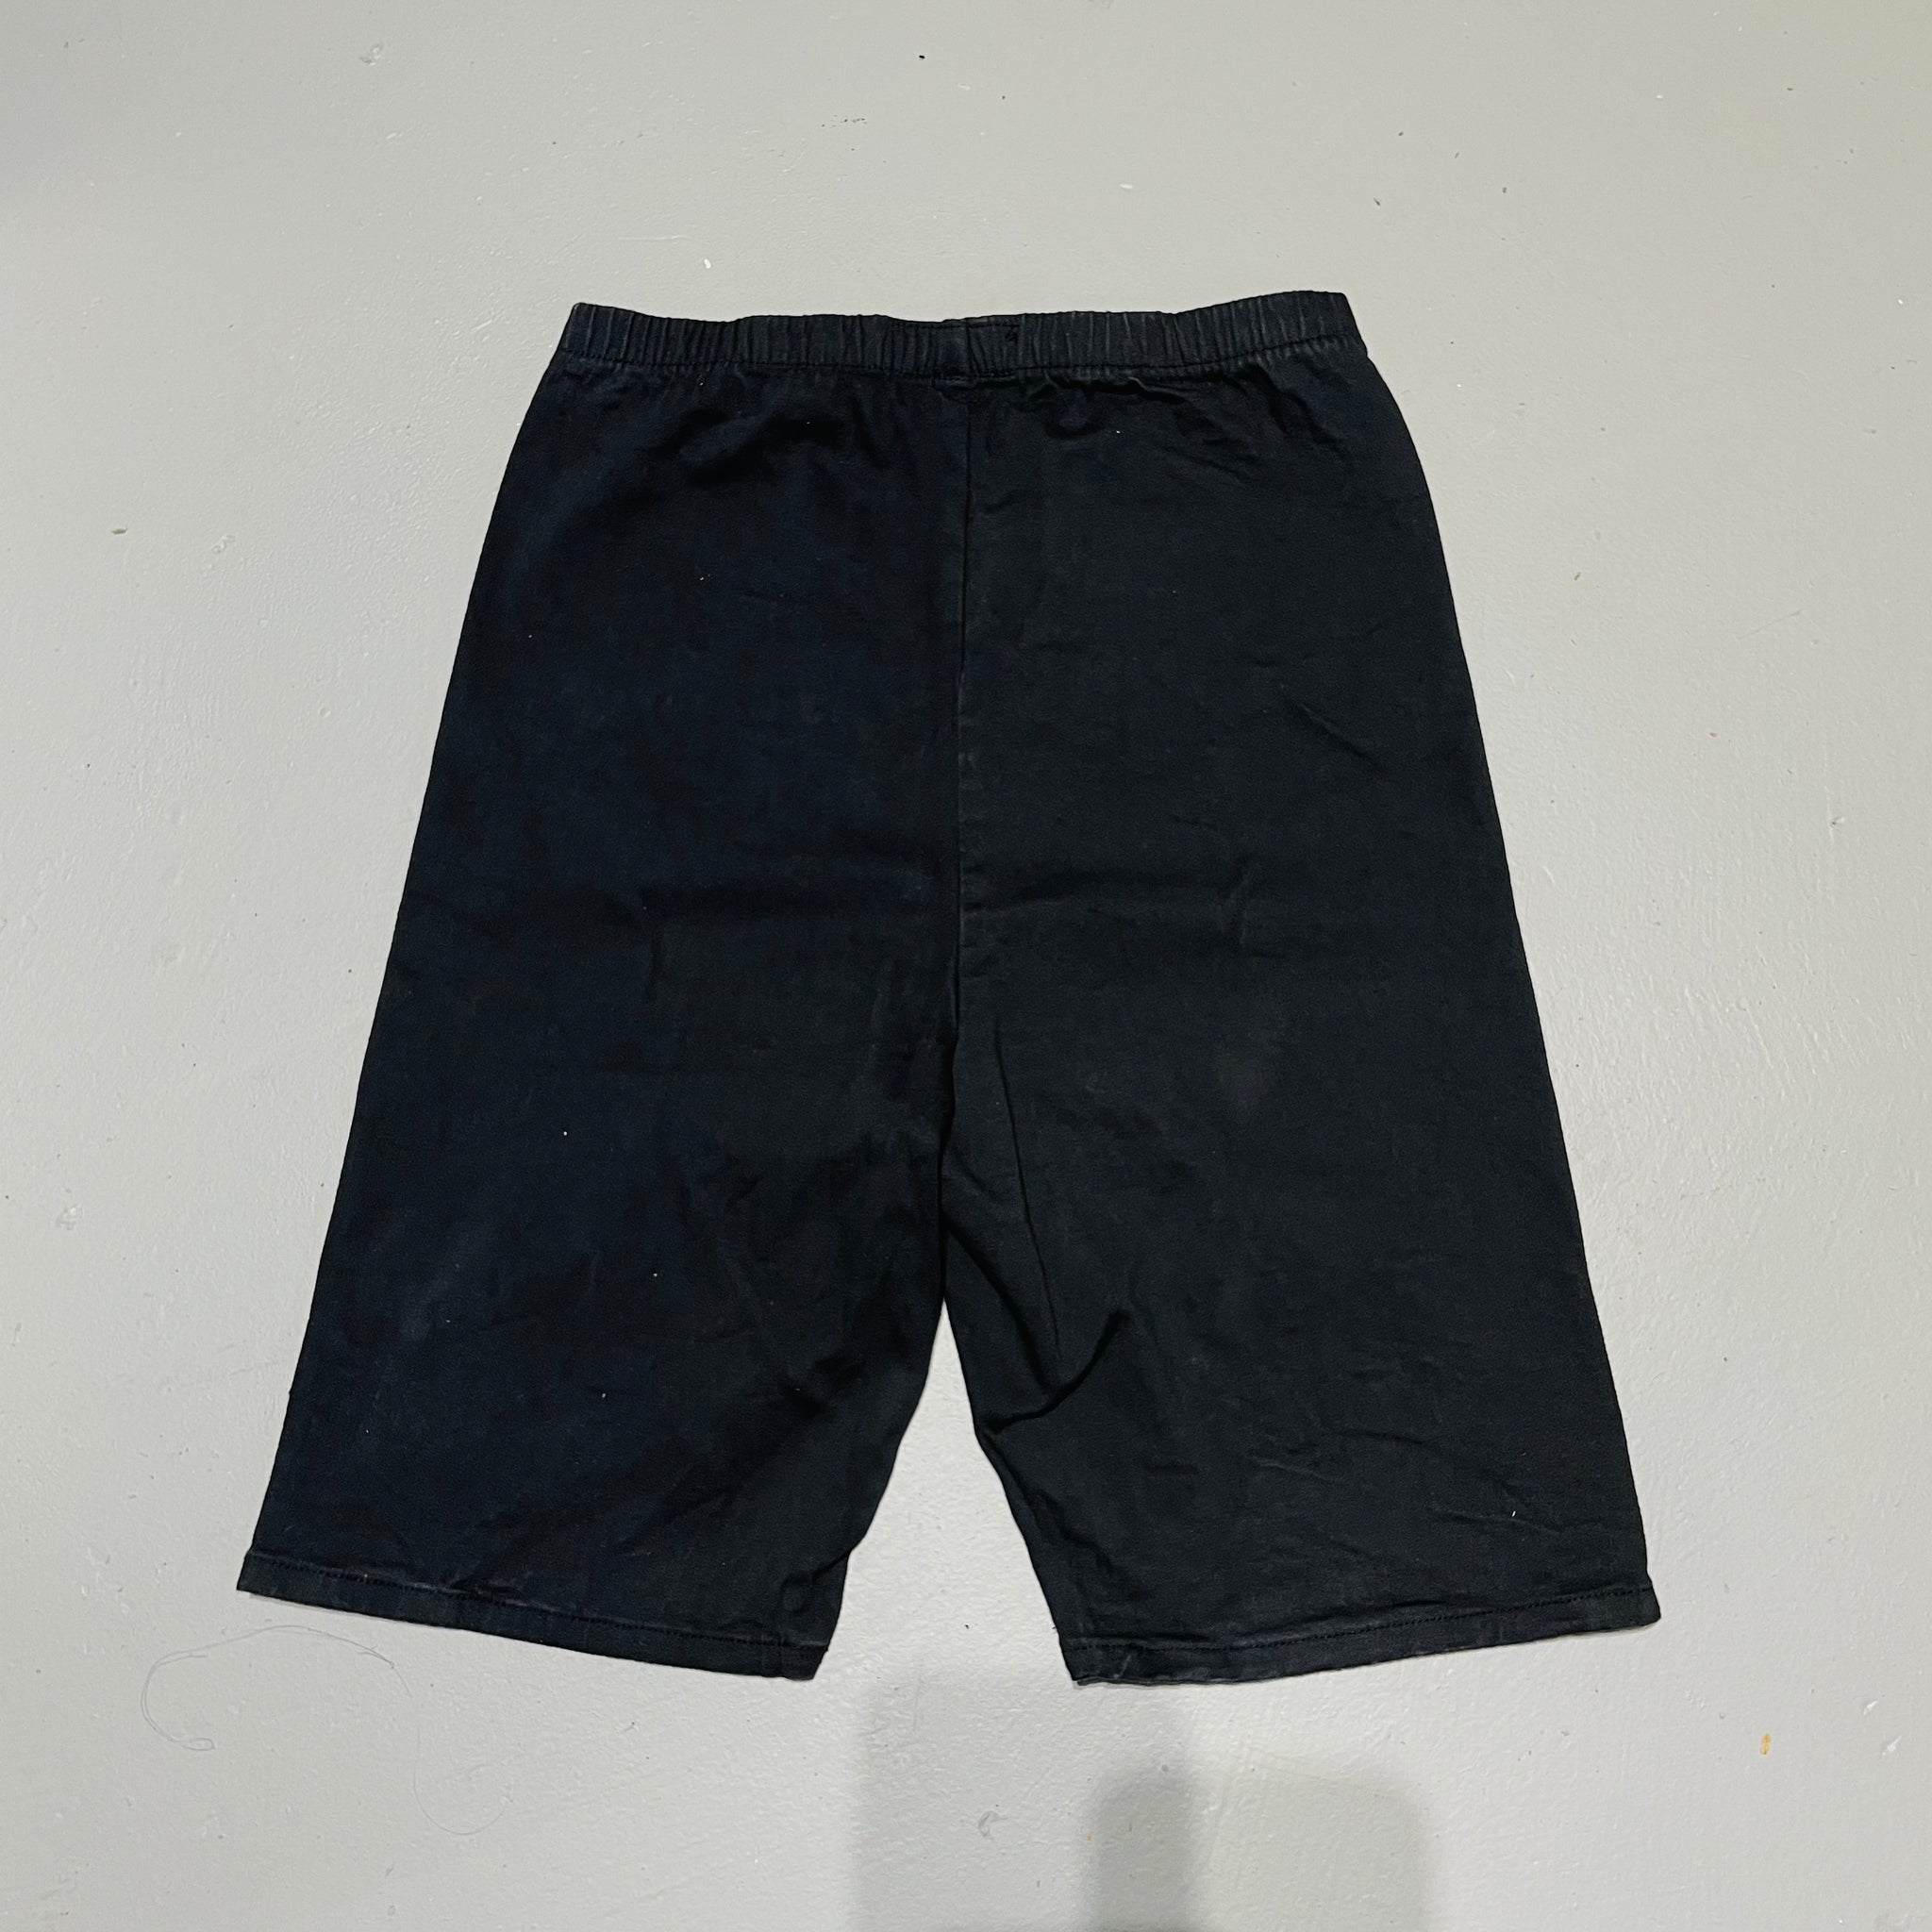 Vintage 1990s biker shorts, Size S